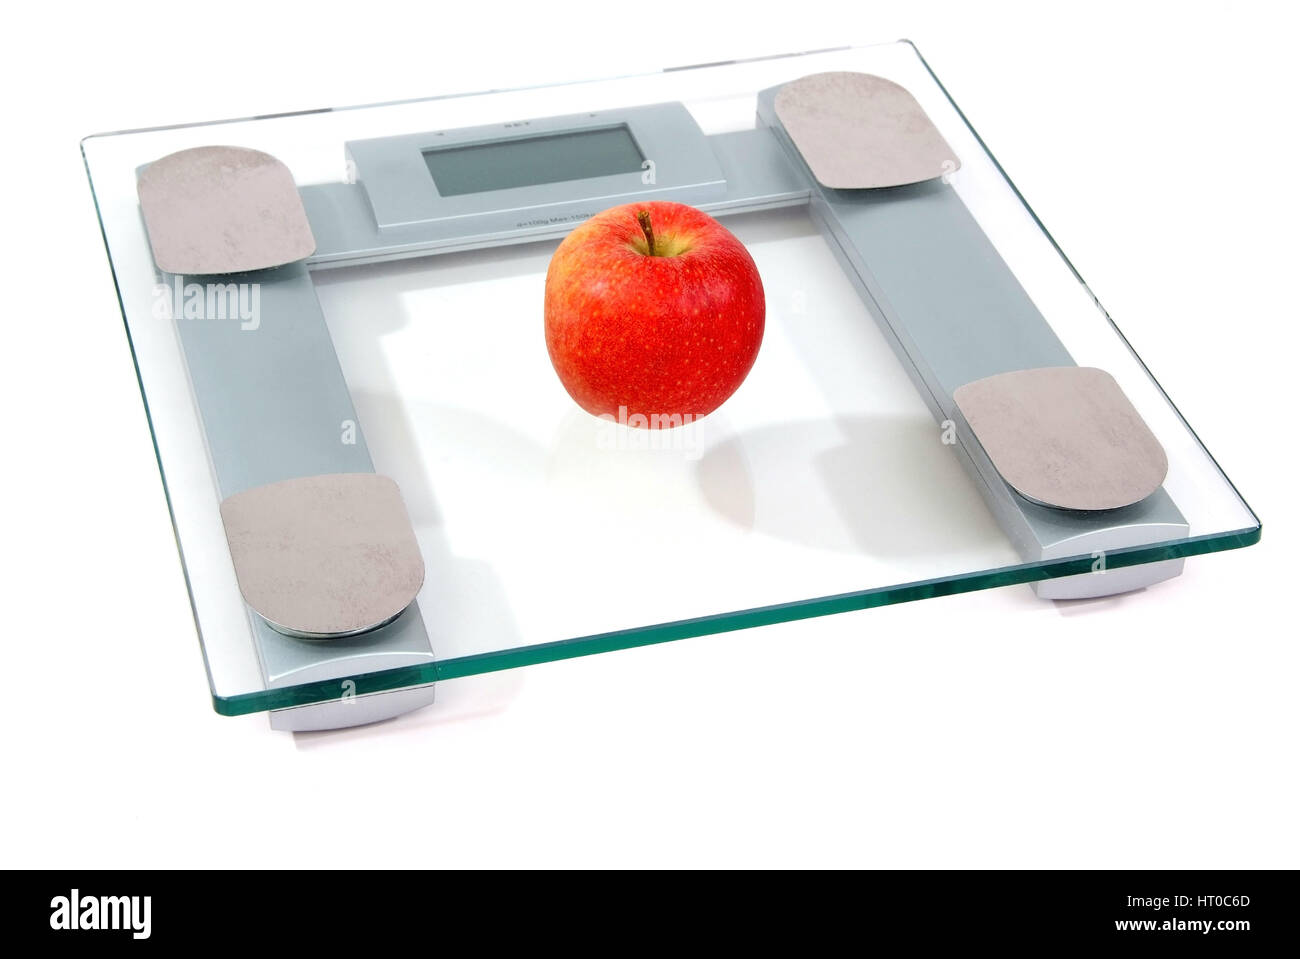 Apfel auf Waage, Symbolbild Leichte Kost - apple on scale Stock Photo